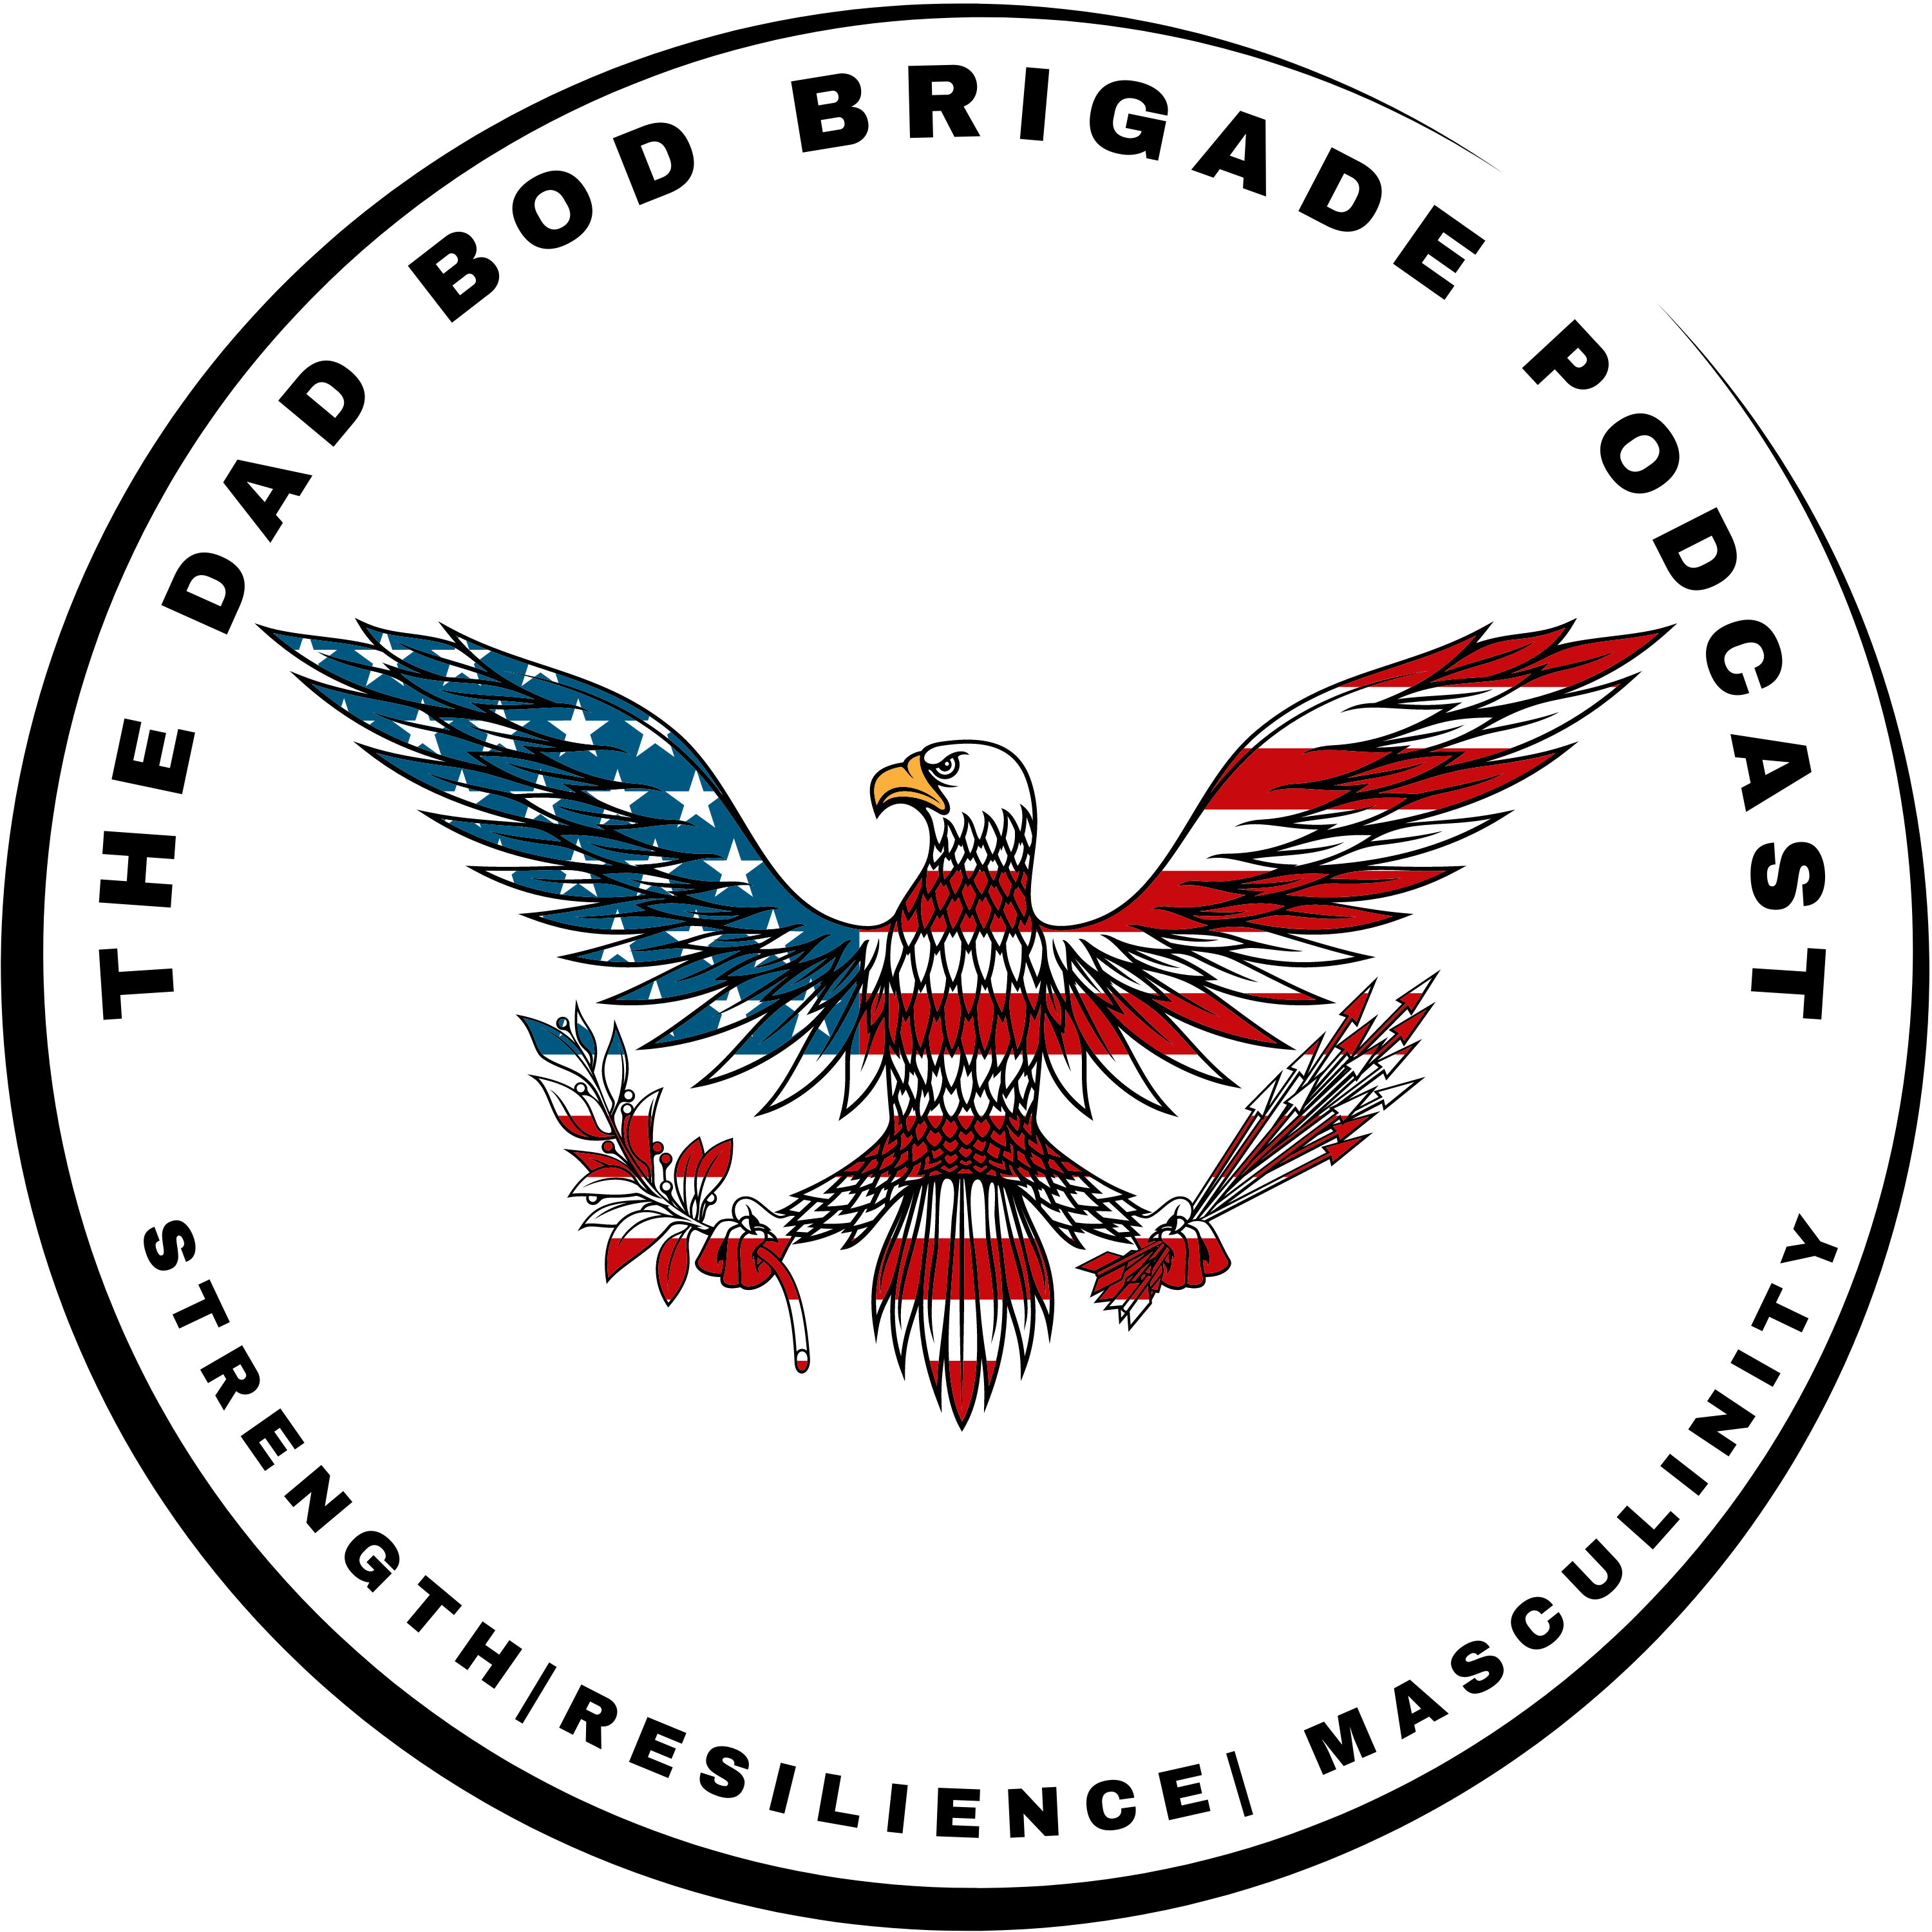 The Dad Bod Brigade Podcast